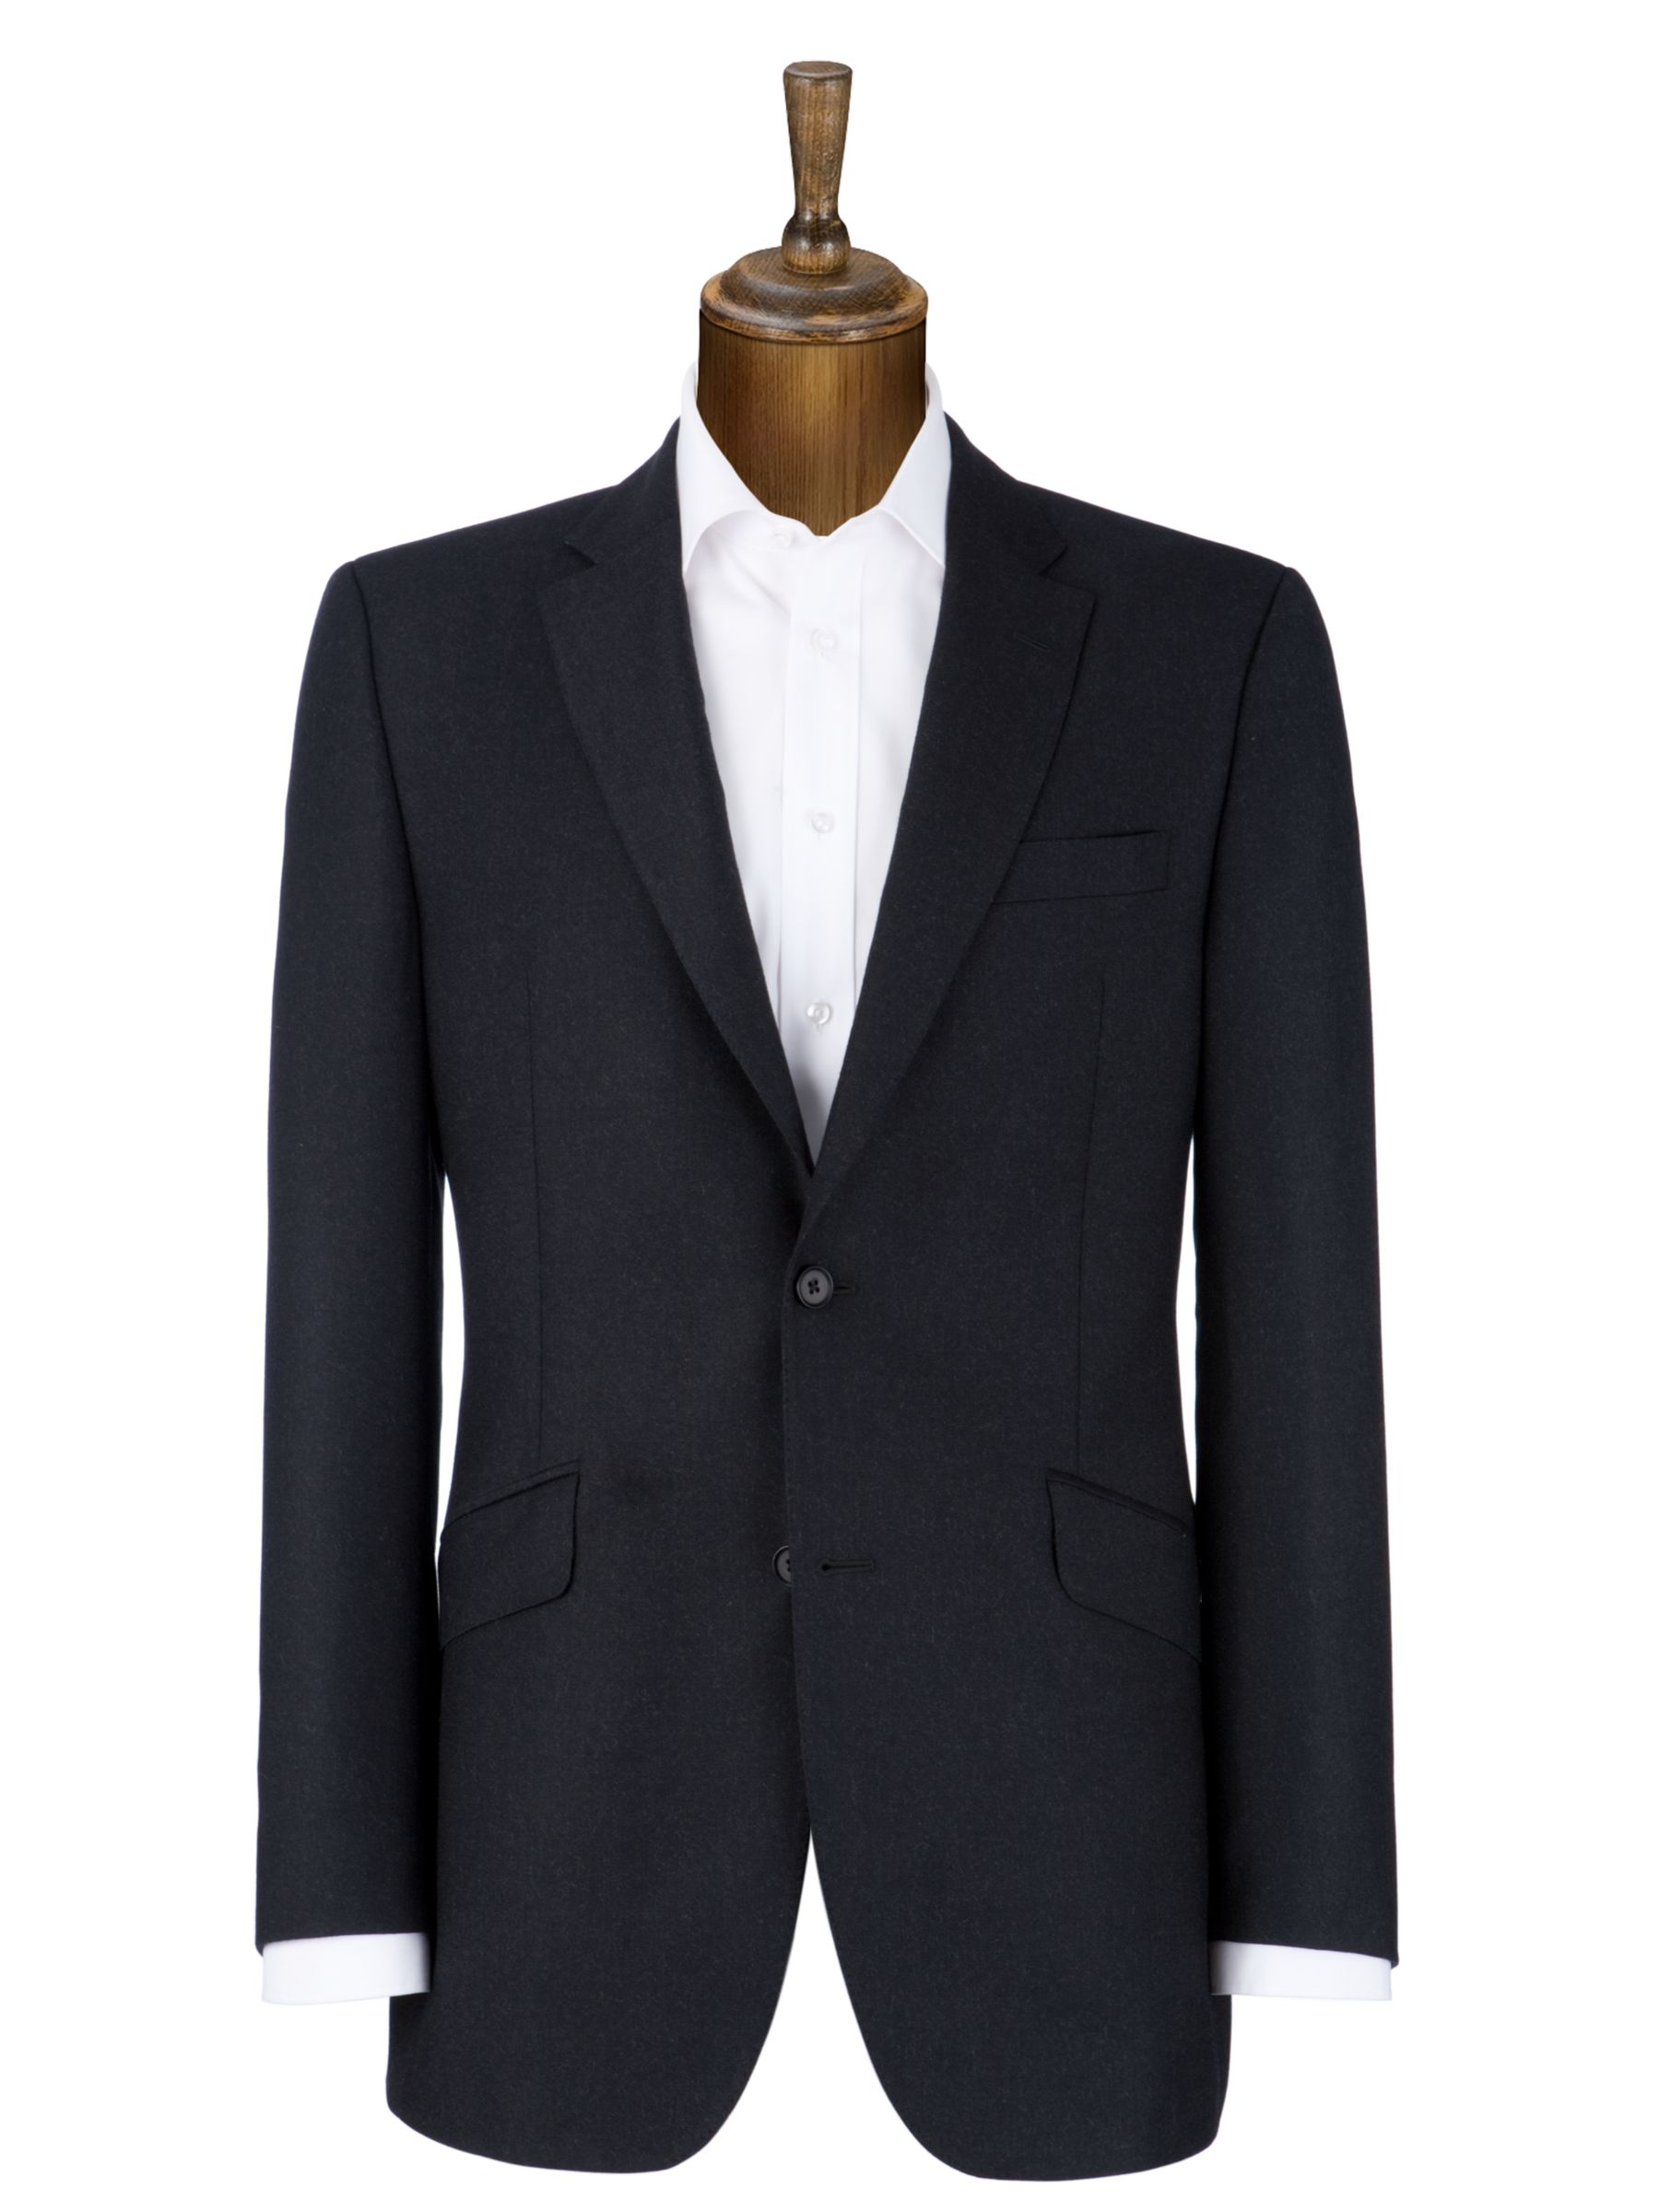 Charlie Allen for John Lewis Wool Cashmere Suit Jacket, Charcoal at John Lewis